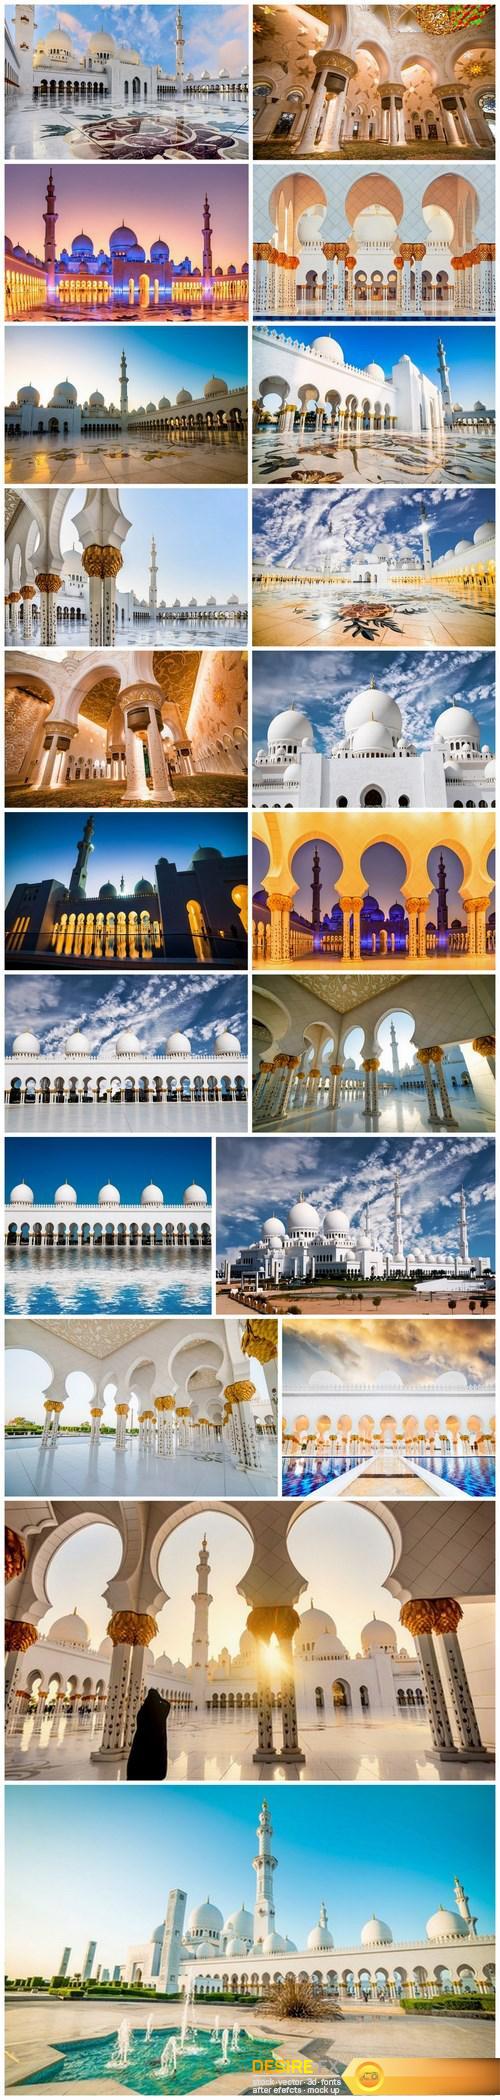 Beautiful arab & islamic architecture - 20xUHQ JPEG Photo Stock